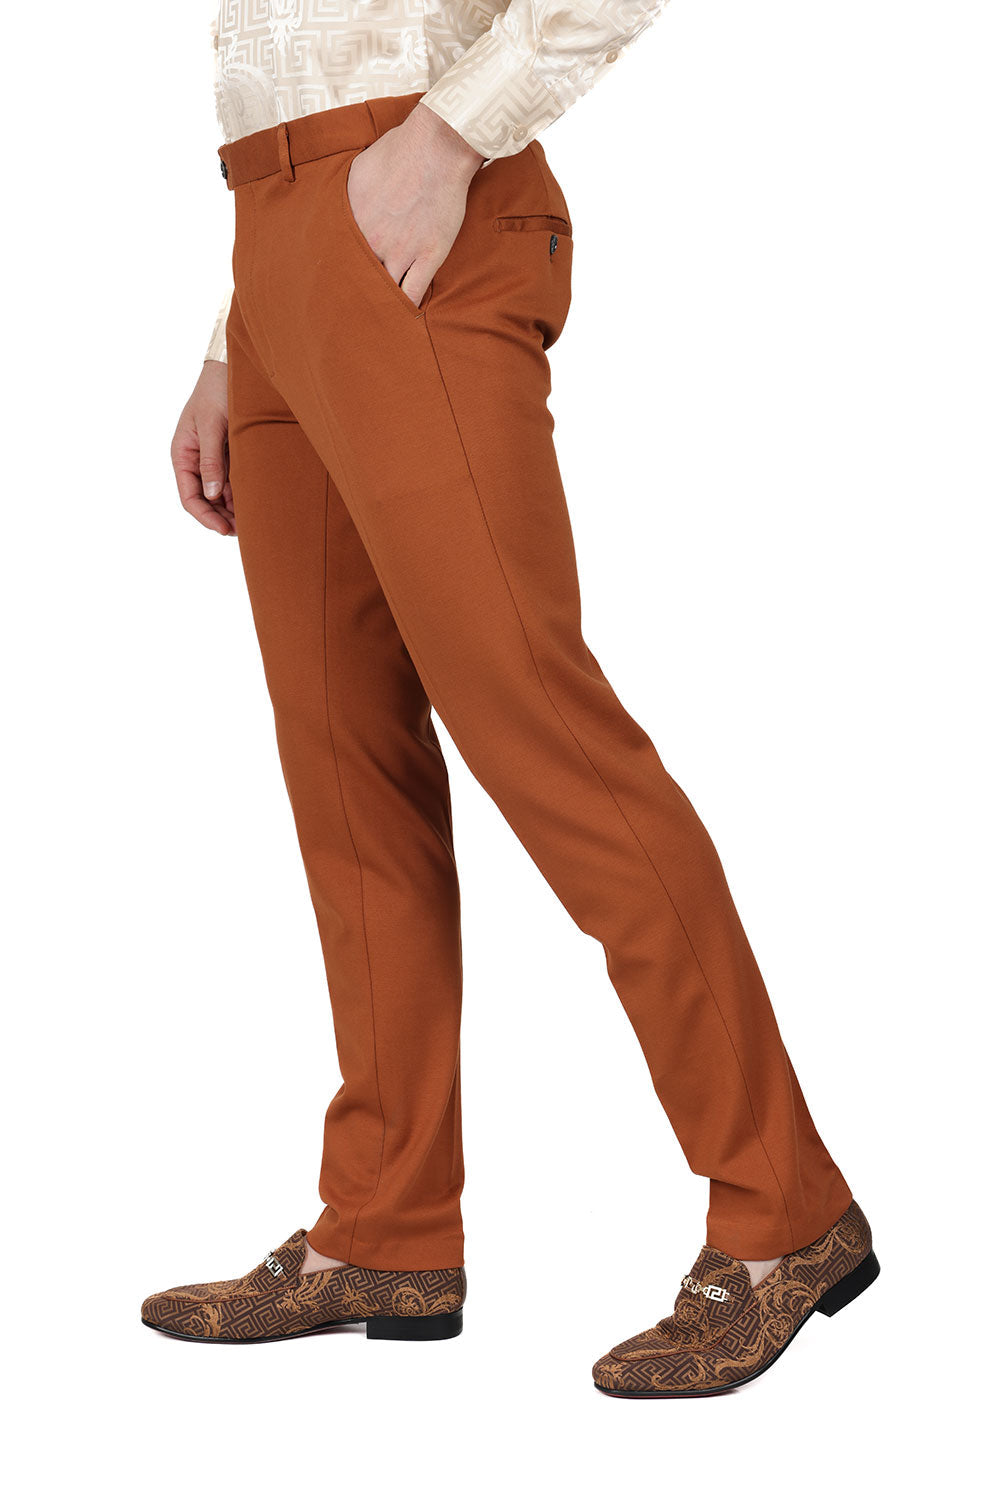 CONCITOR Mens Dress Pants Trousers Flat Front Slacks Solid Orange Color 48   Amazonin Clothing  Accessories